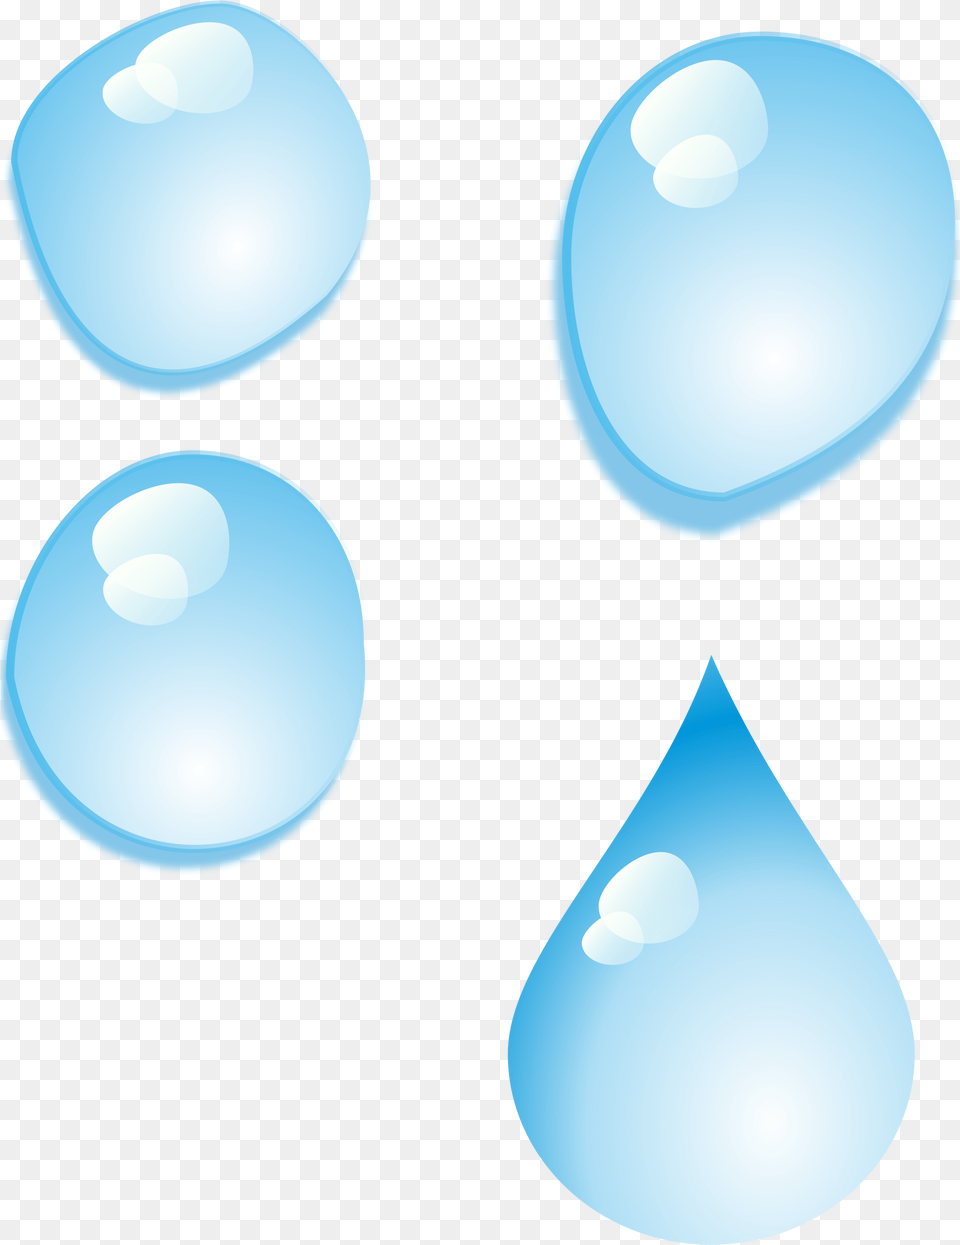 Open Water Drop Transparent Background, Droplet, Lighting, Balloon, Sphere Png Image